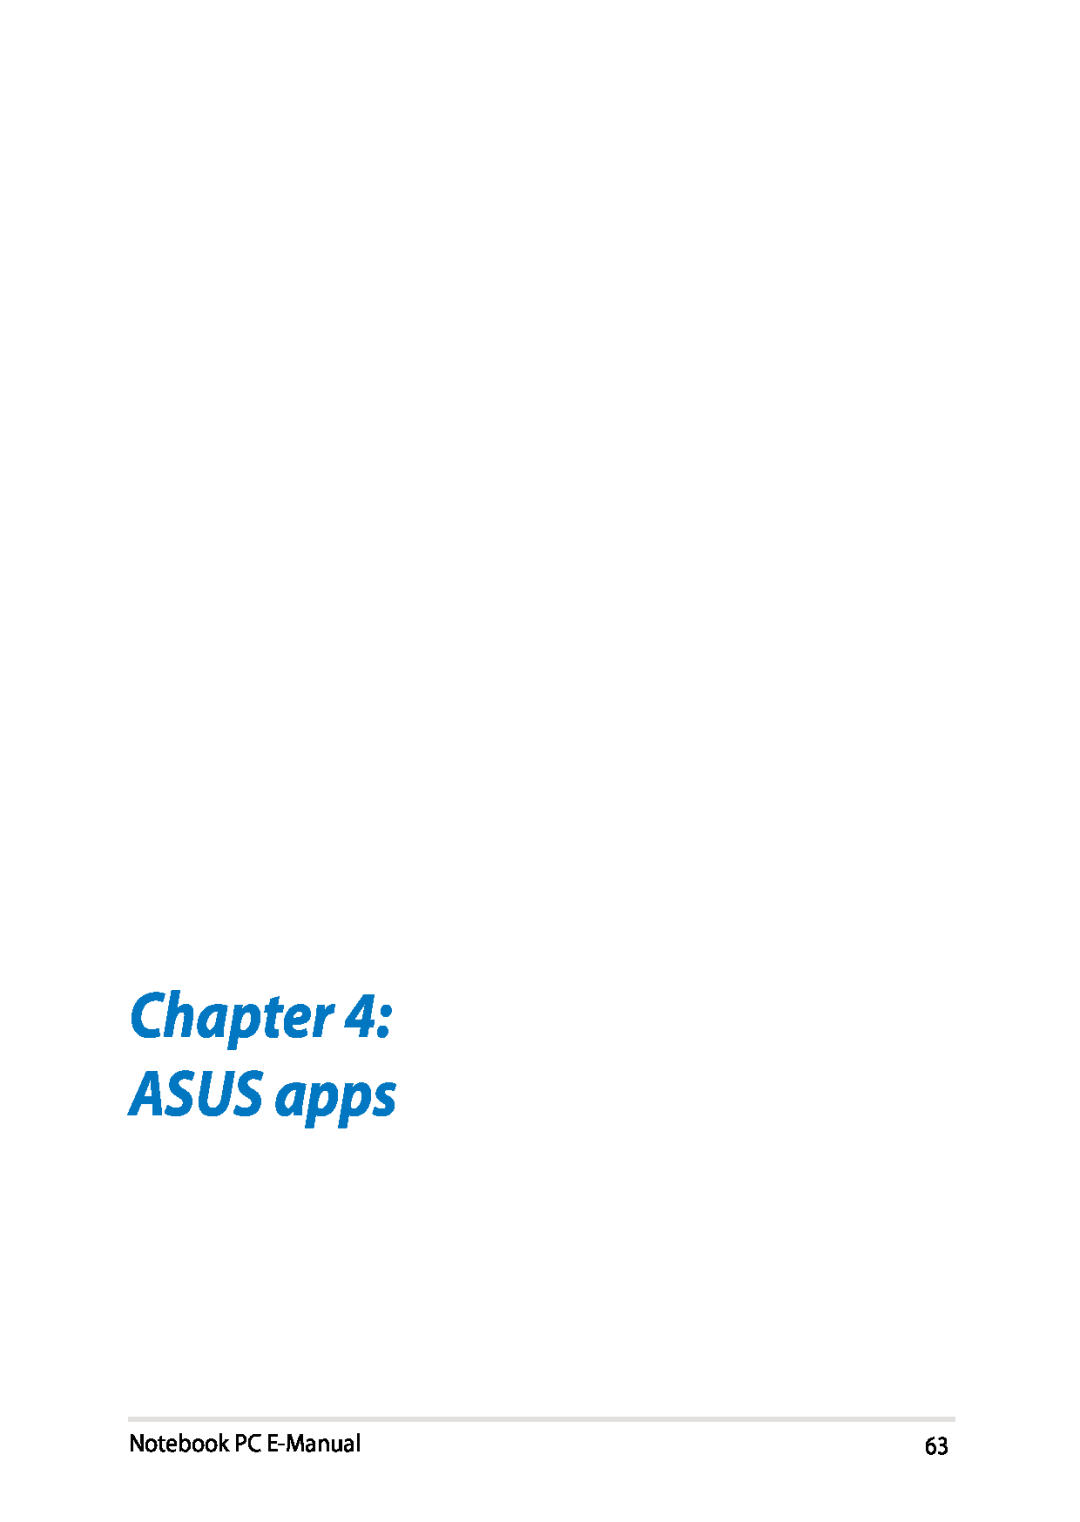 Asus E8438 manual ASUS apps, Notebook PC E-Manual 